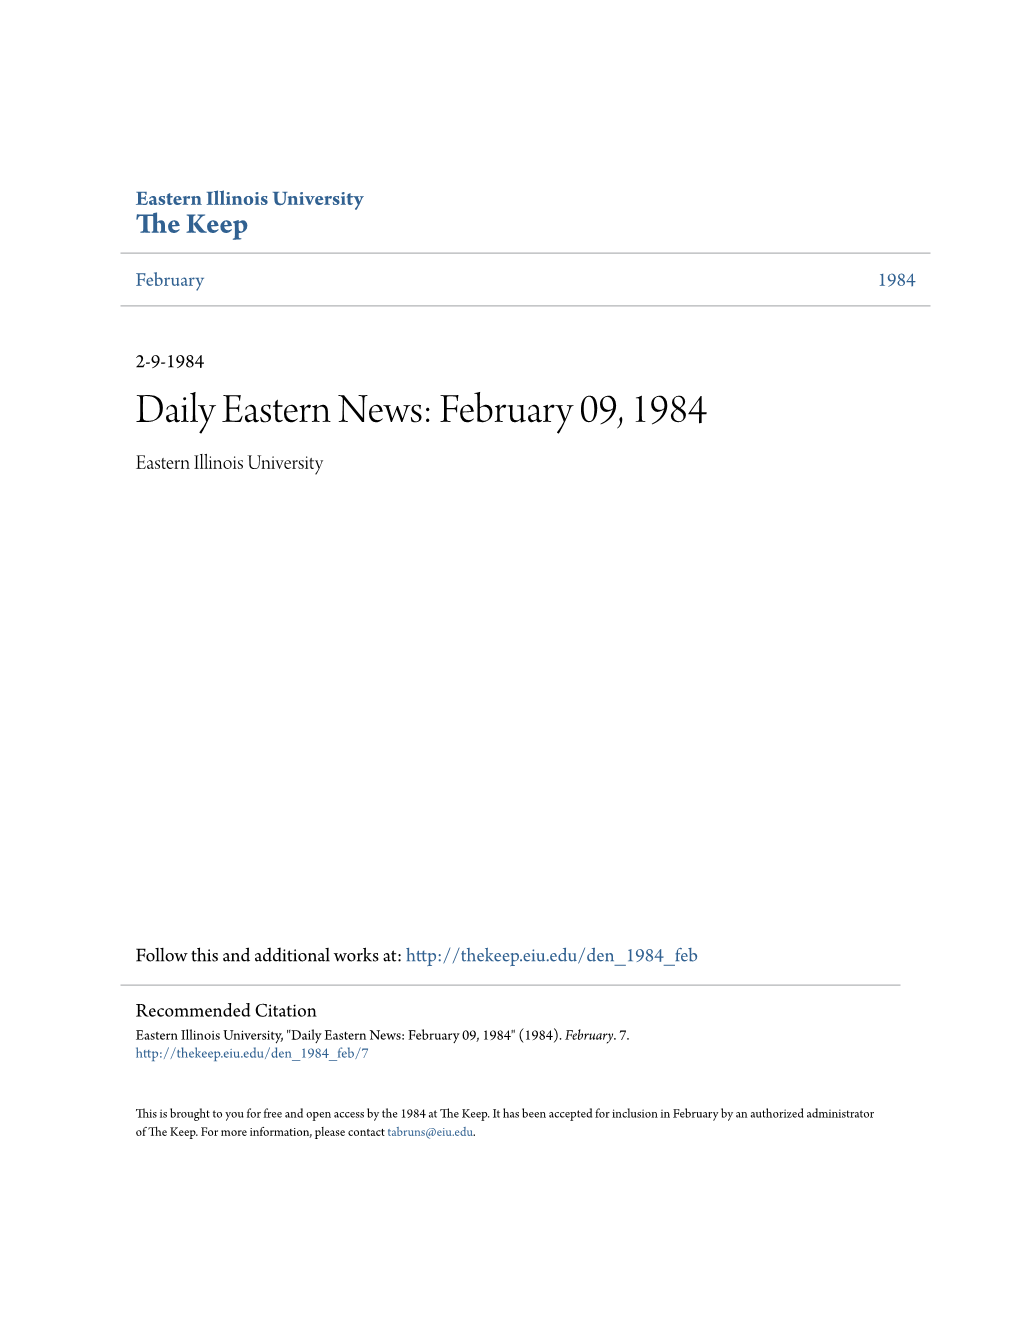 Astern News: February 09, 1984 Eastern Illinois University